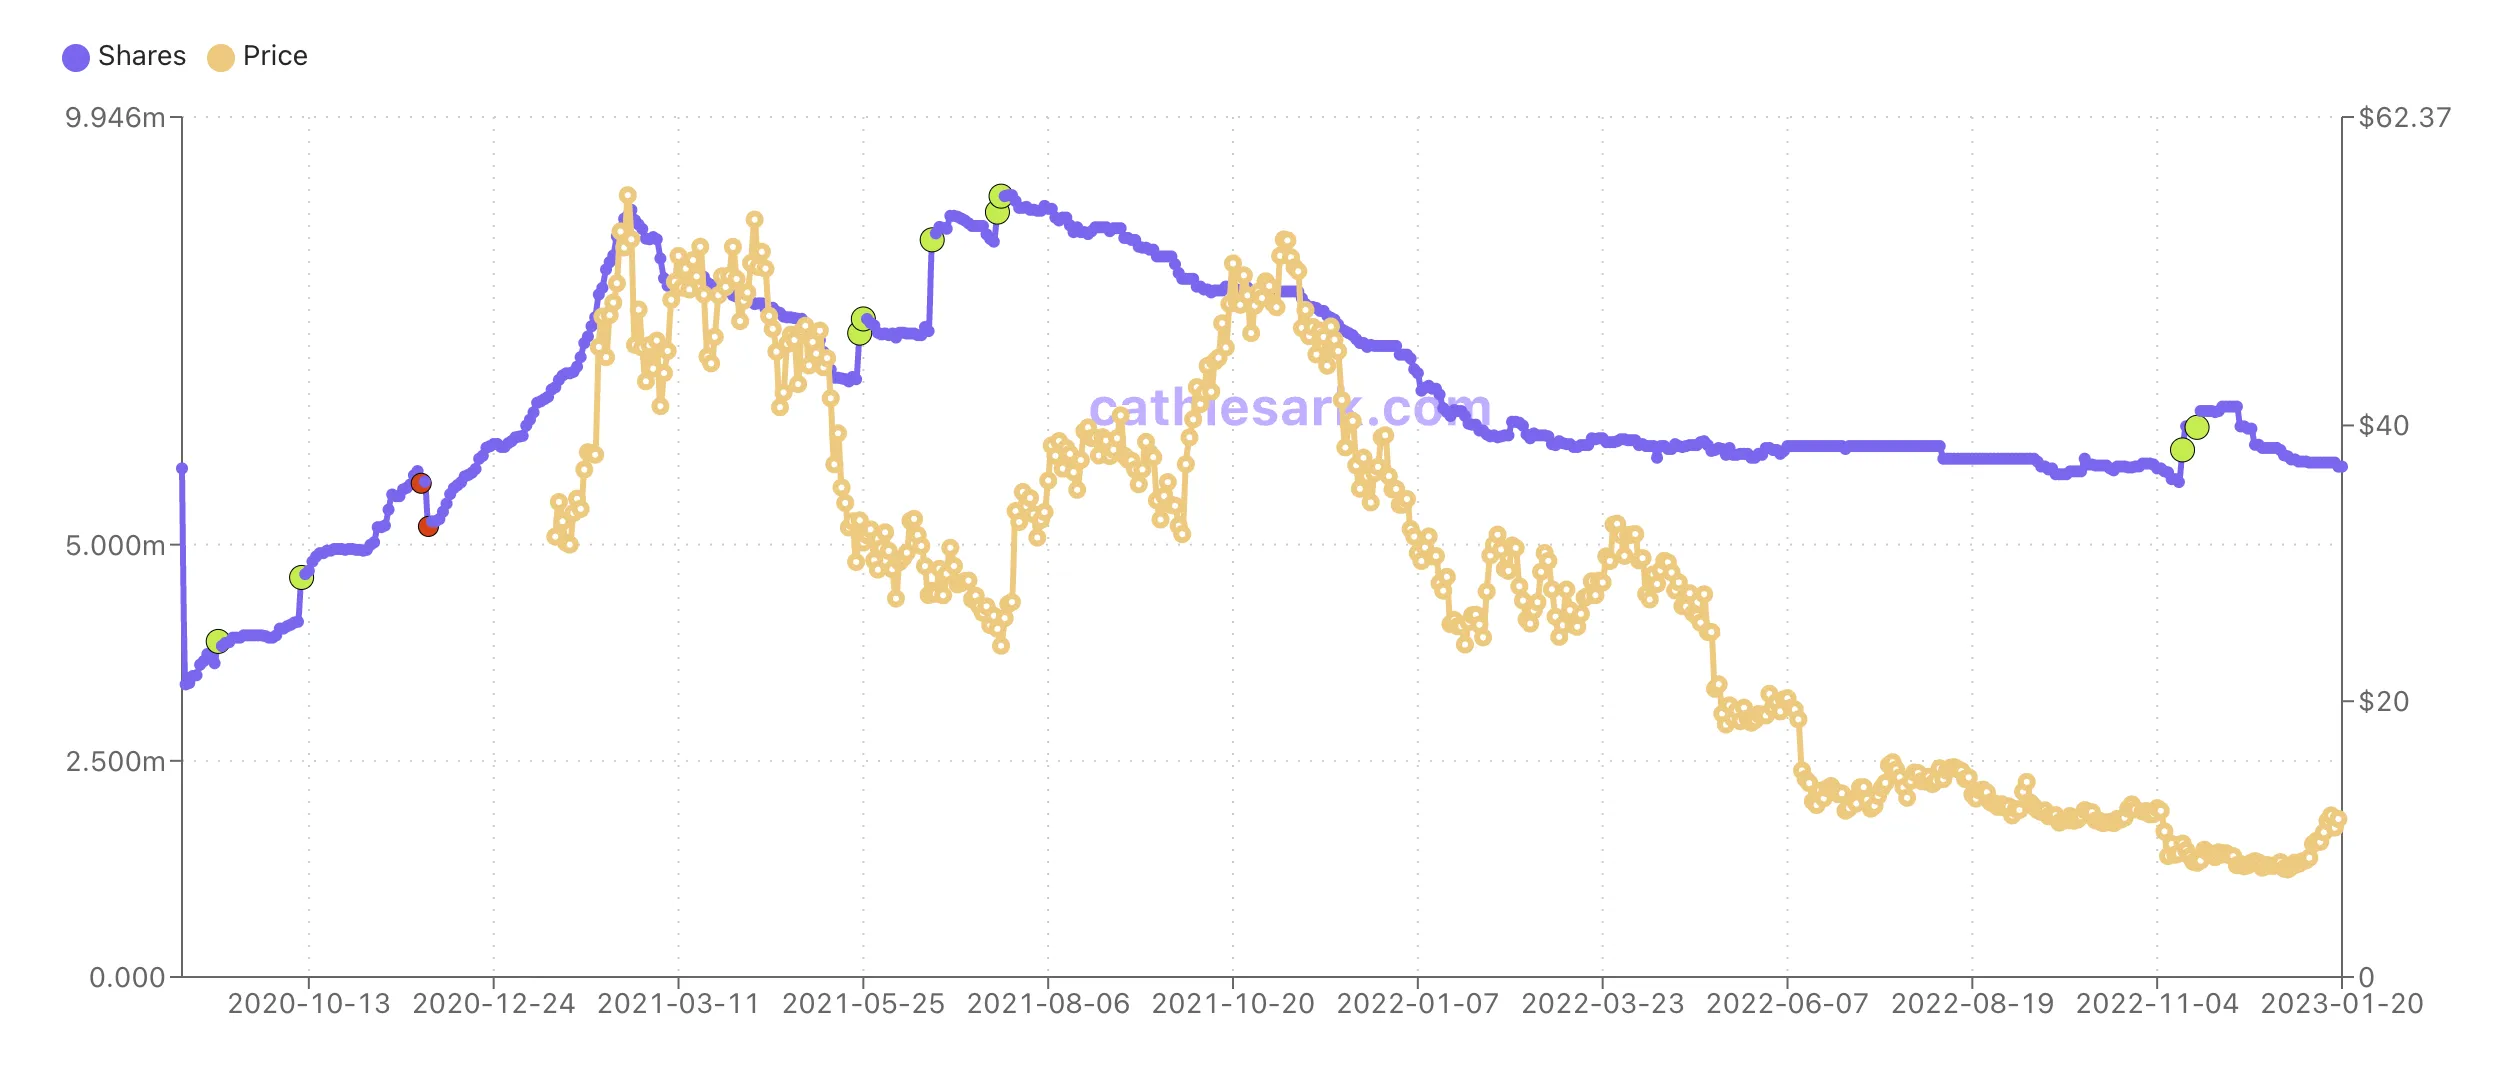 GBTC shares (purple) in Ark's ETF versus its price (orange). Source - Cathiesark.com